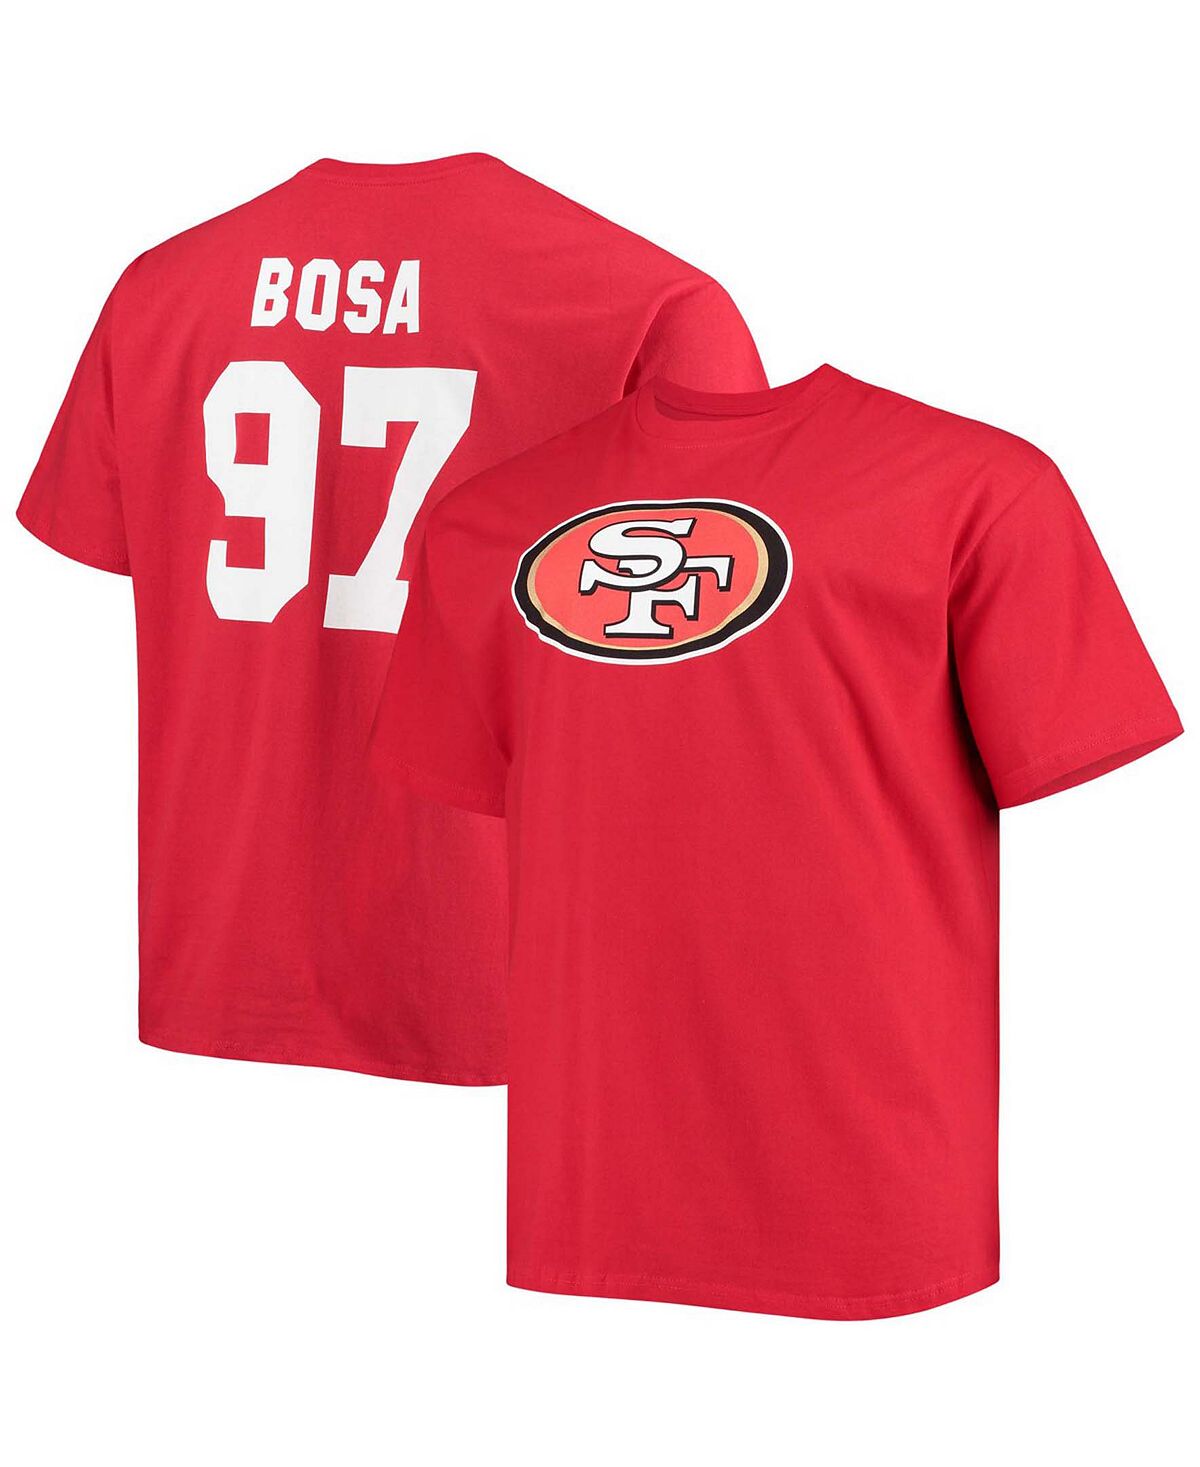 Мужская футболка Big and Tall Nick Bosa Scarlet San Francisco 49Ers с именем игрока и номером Fanatics